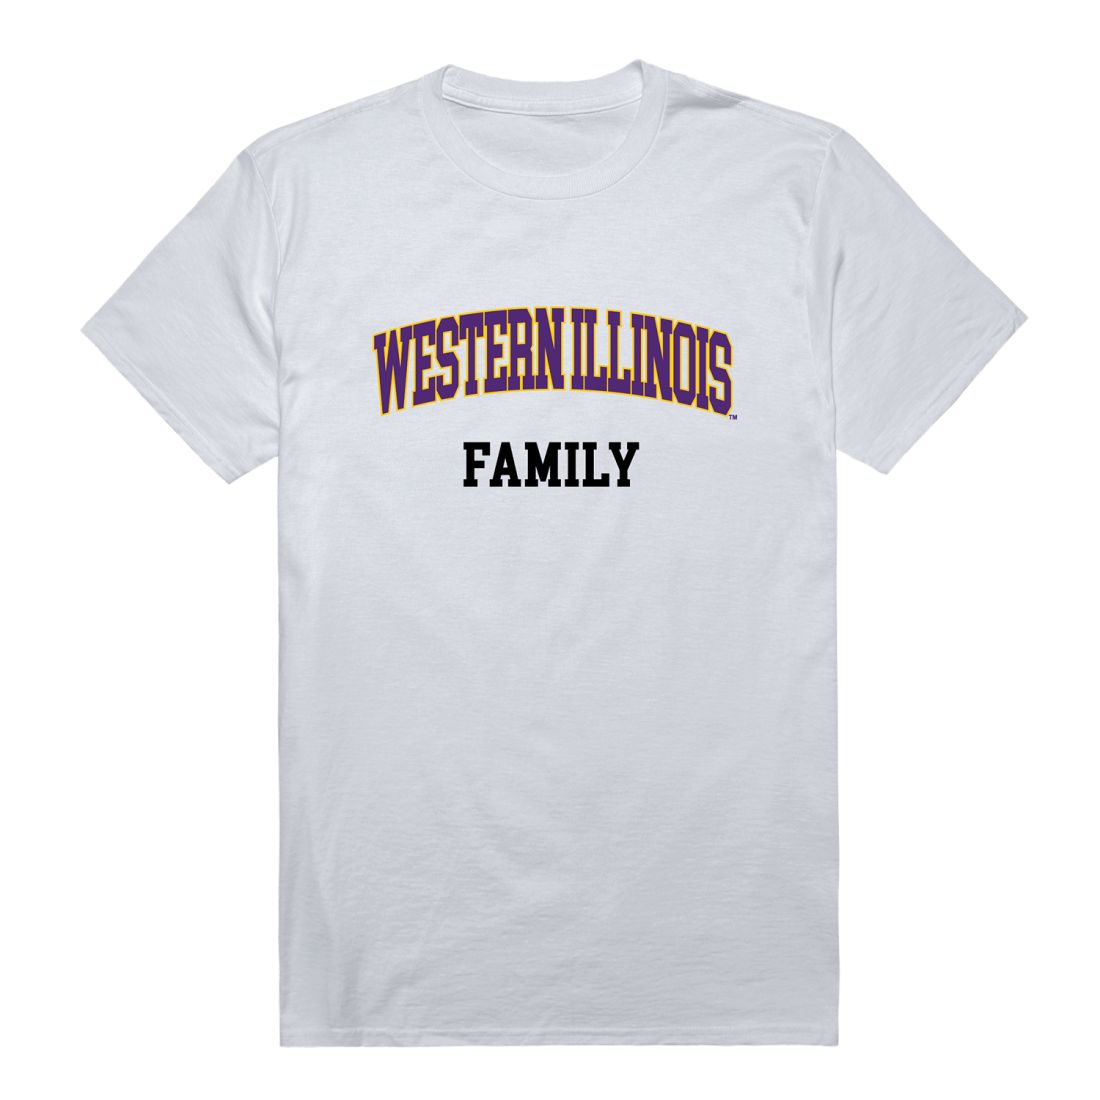 WIU Western Illinois University Leathernecks Family T-Shirt